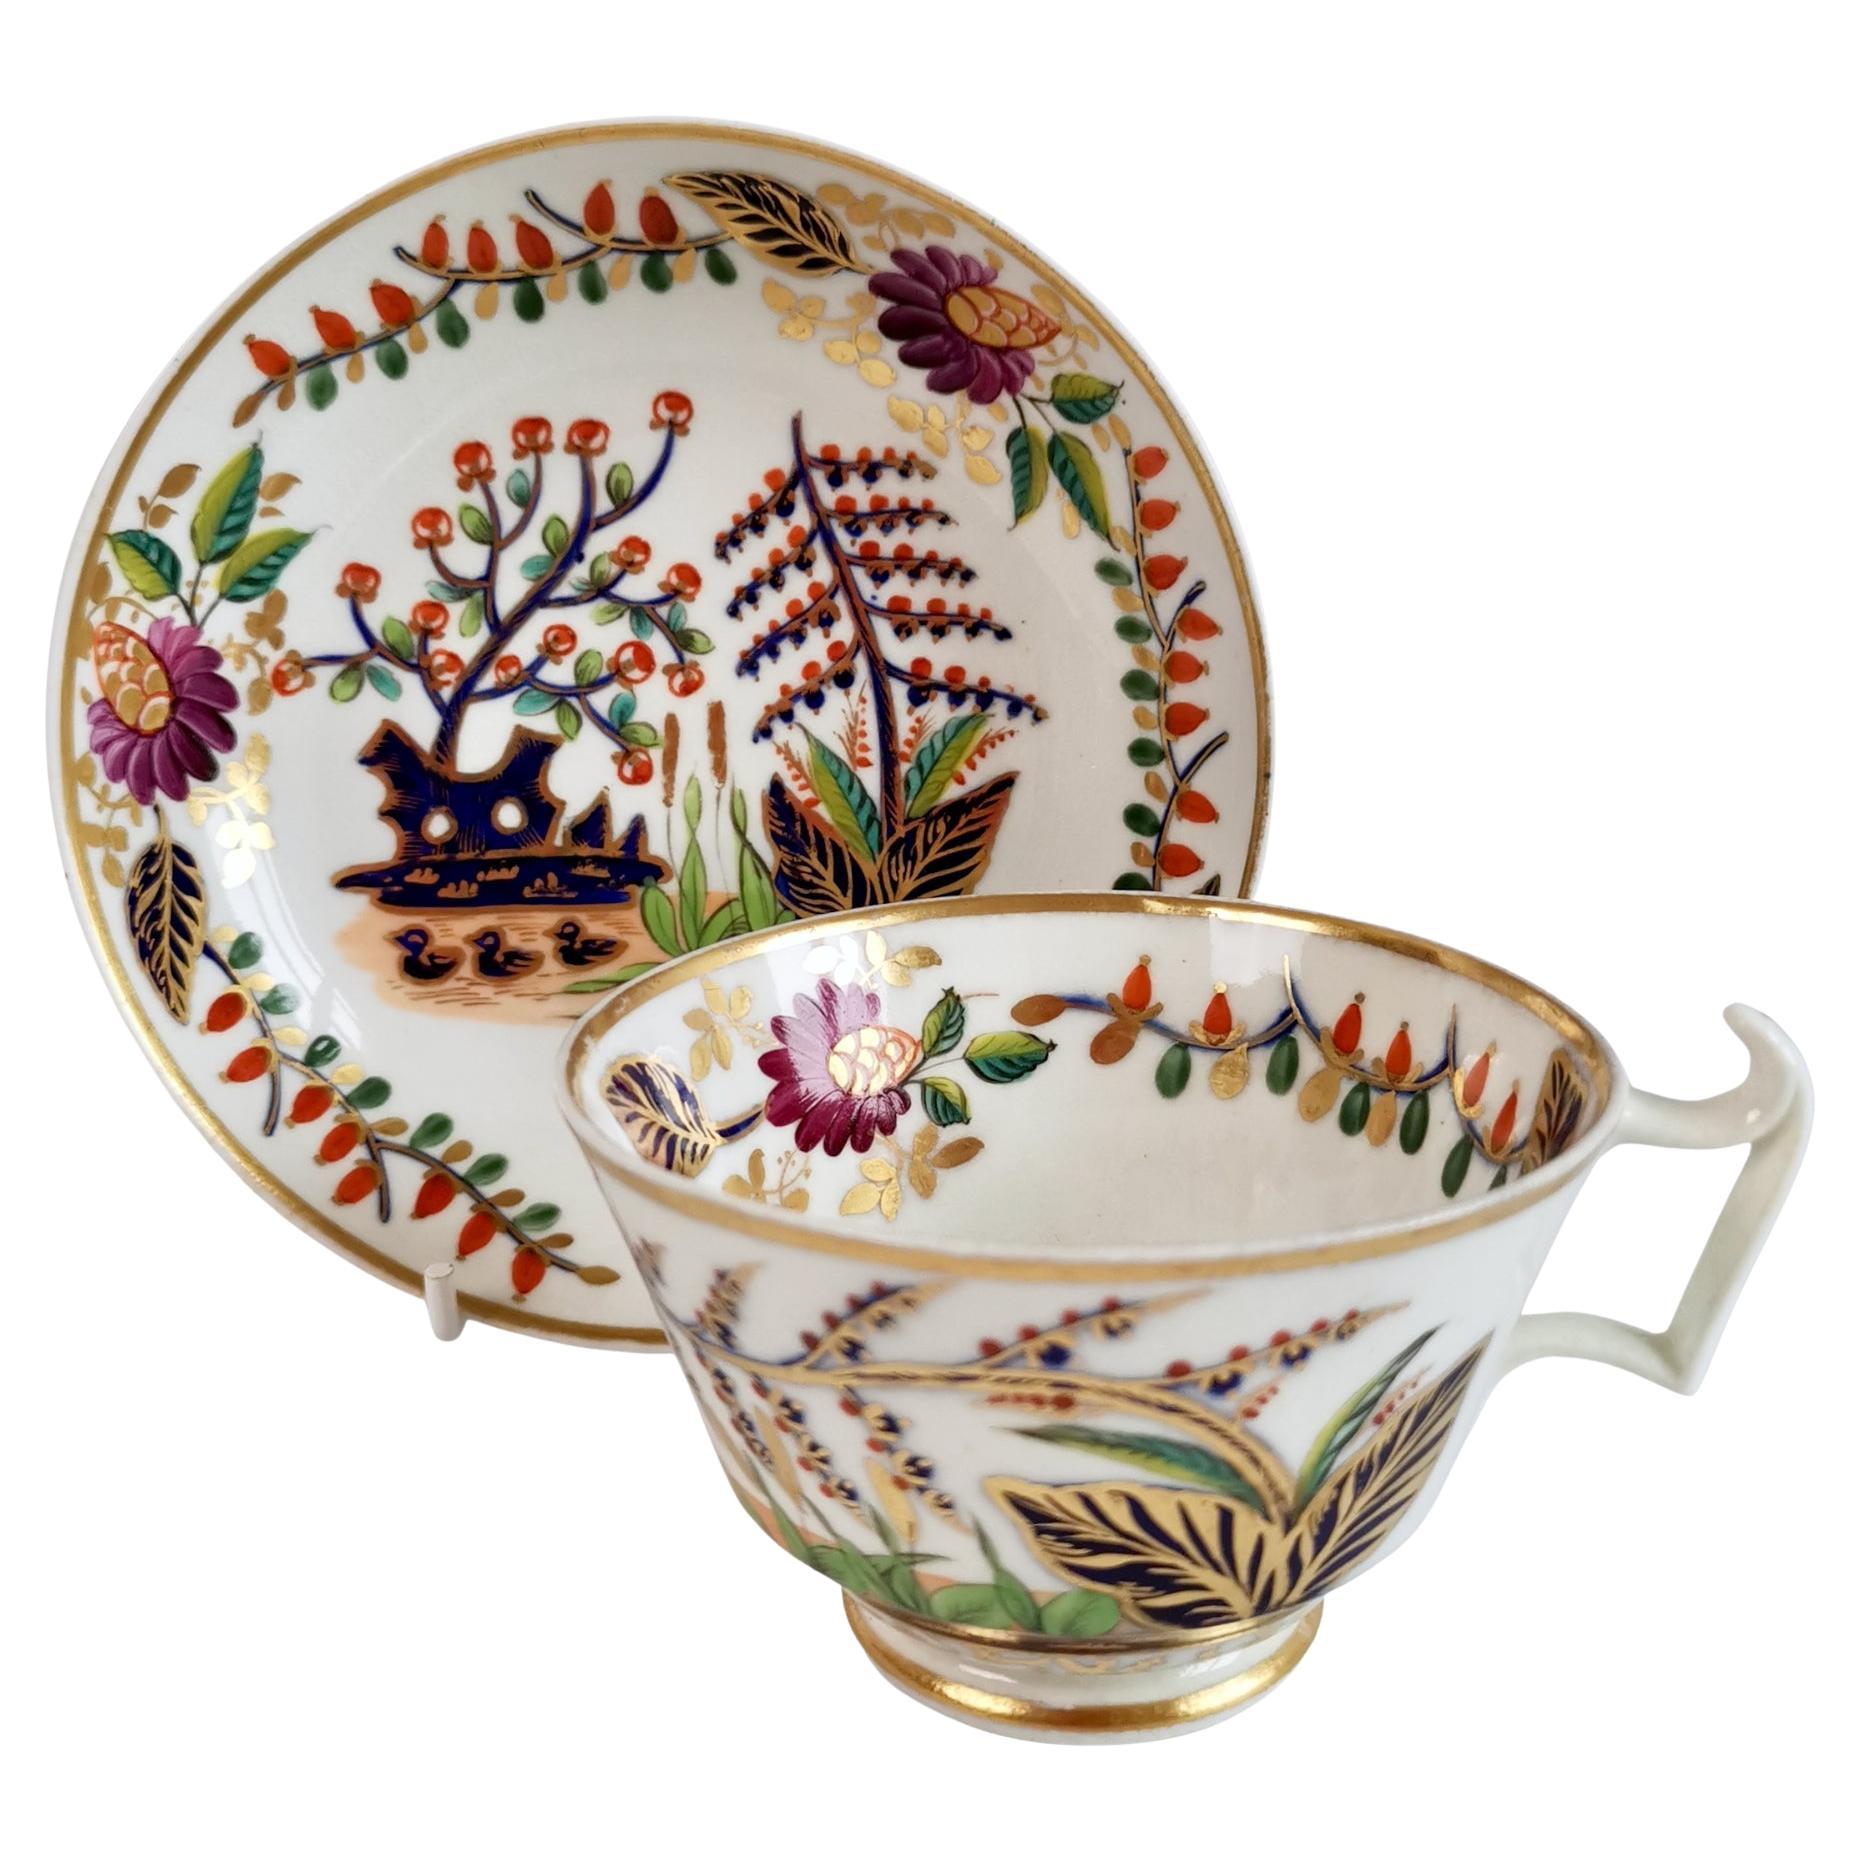 Derby Porcelain Teacup, Japan Pattern with Ducks, Regency, 1815-1820